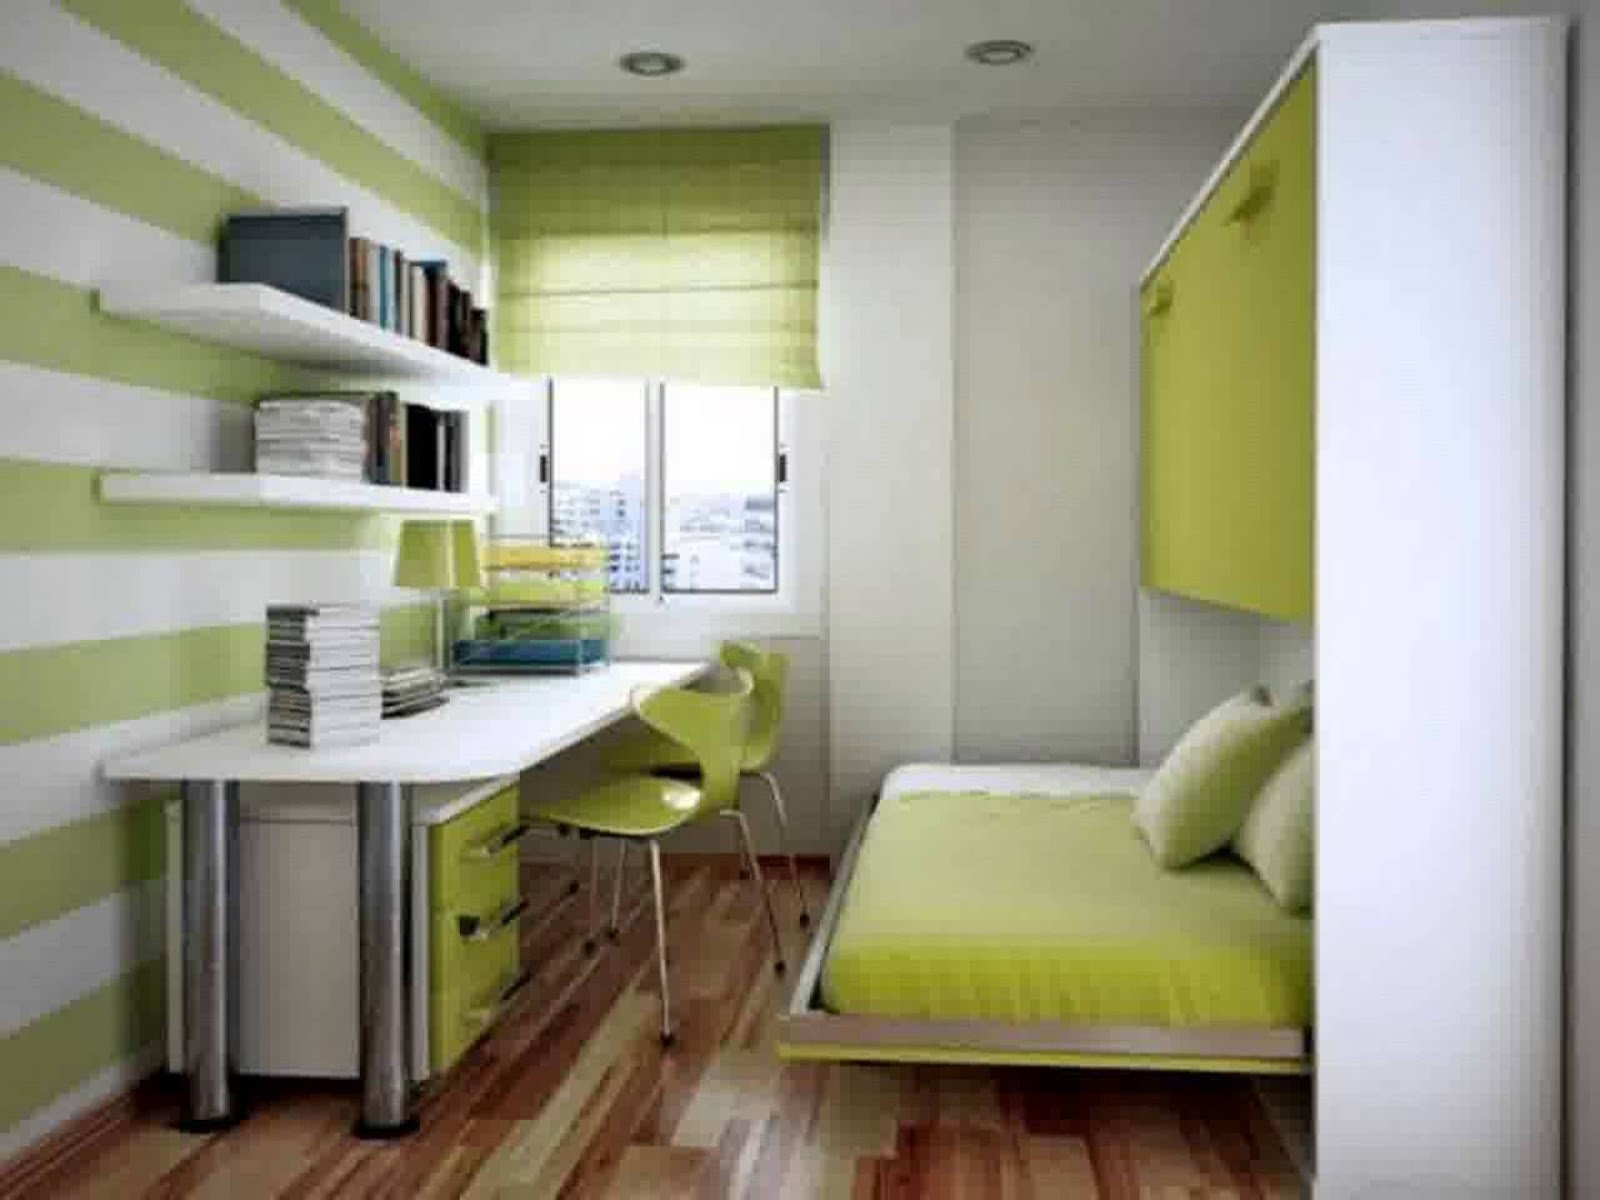  Desain  Kamar  Tidur Minimalis Ukuran 2x4 Wallpaper Dinding